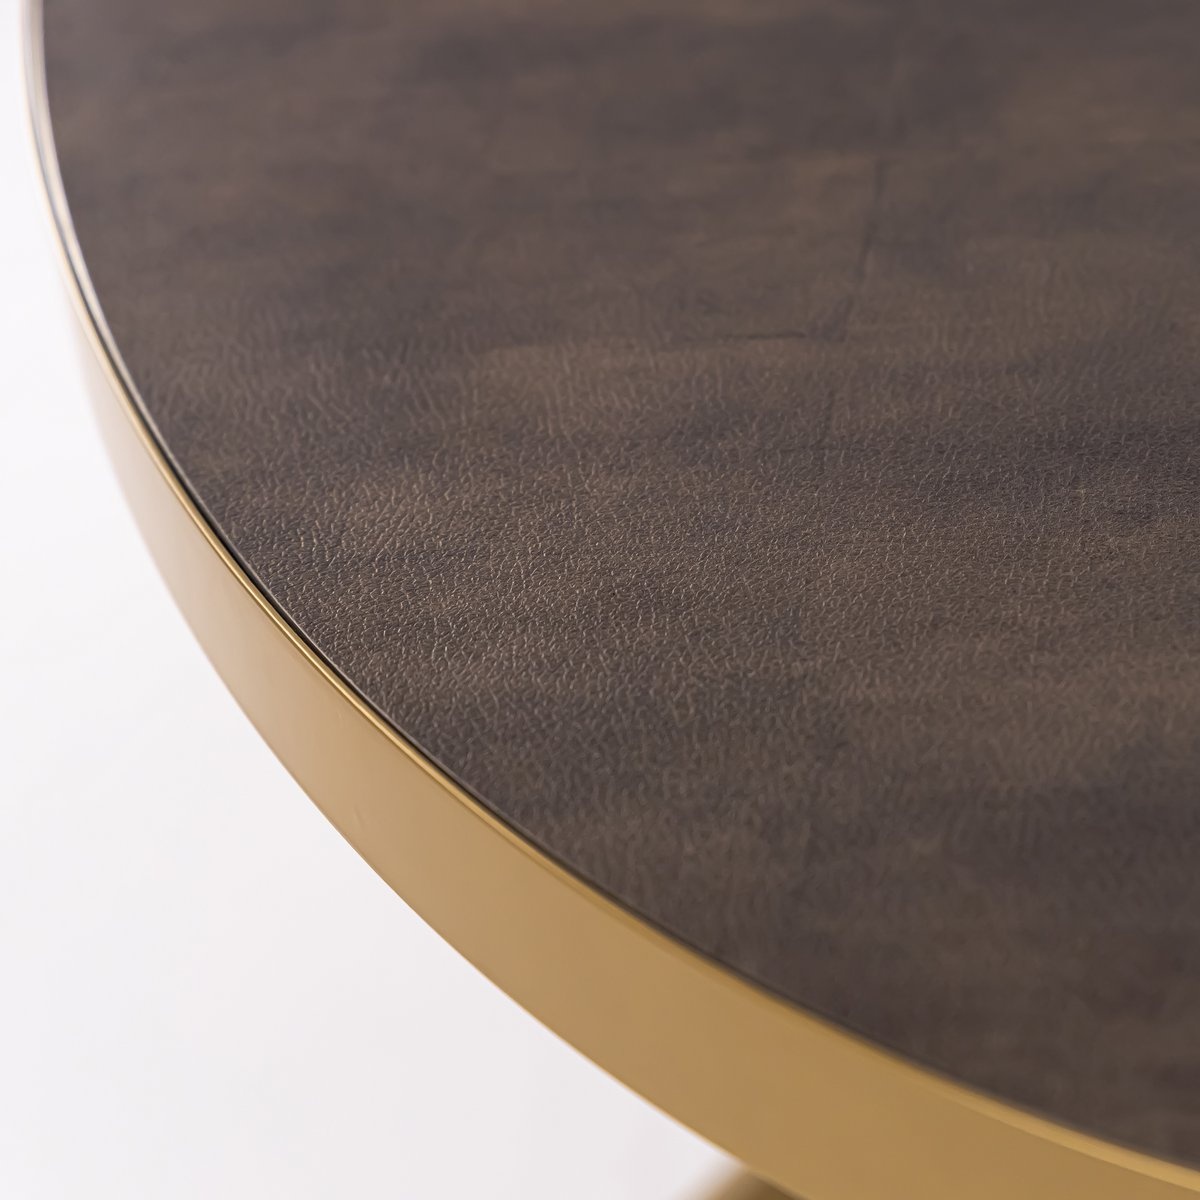 KantoormeubelenPlus Stalux Ovale eettafel 'Mees' 240 x 110cm, kleur goud / lederlook bruin